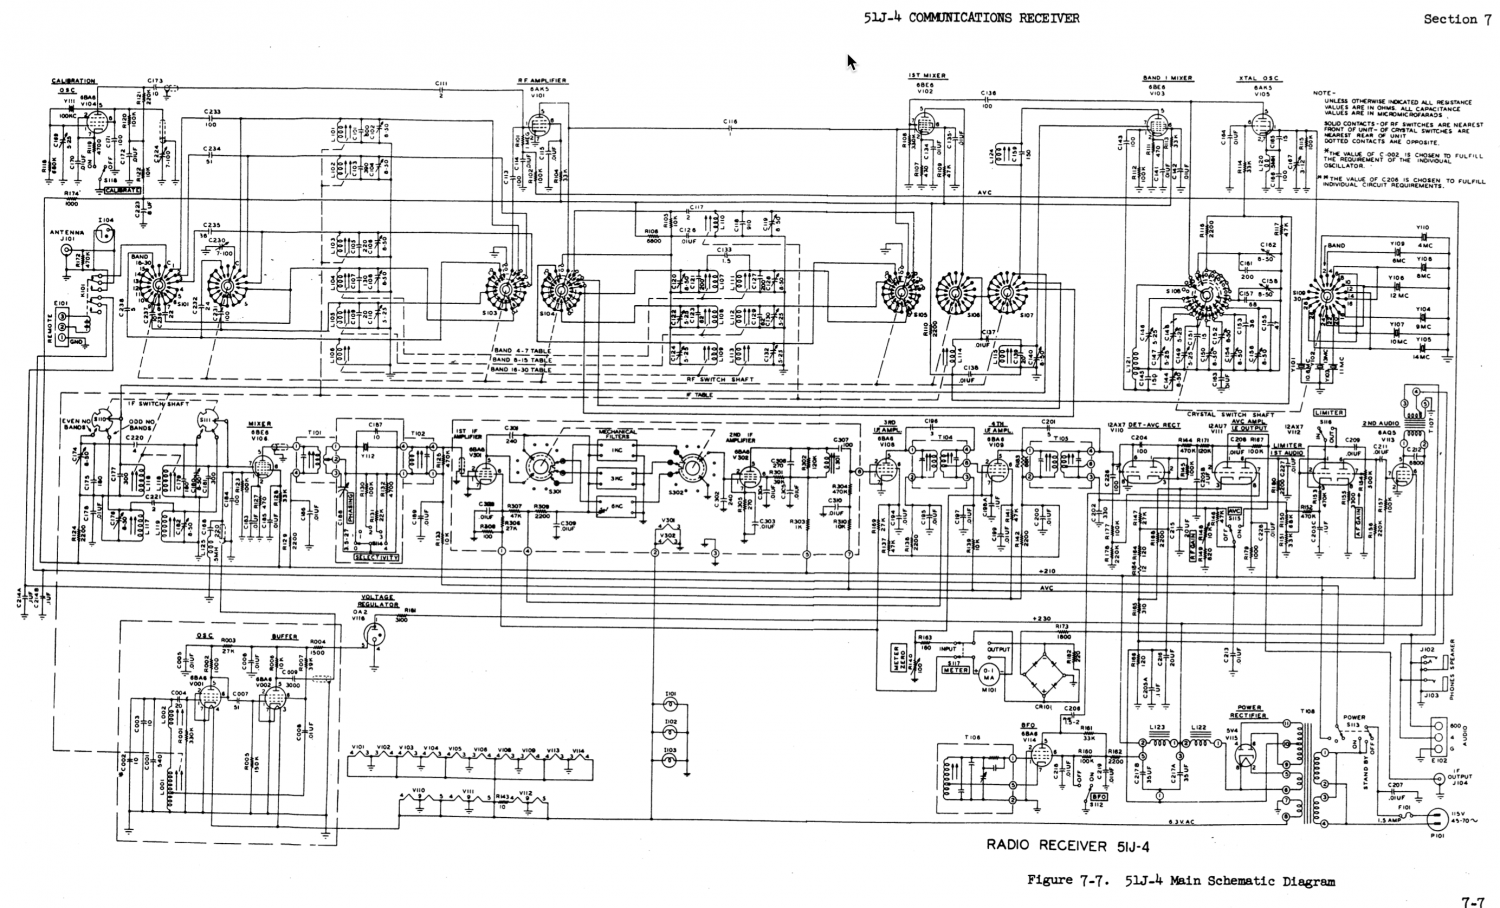 Collins 51J-4 Communications Receiver - Schematic Diagram 2